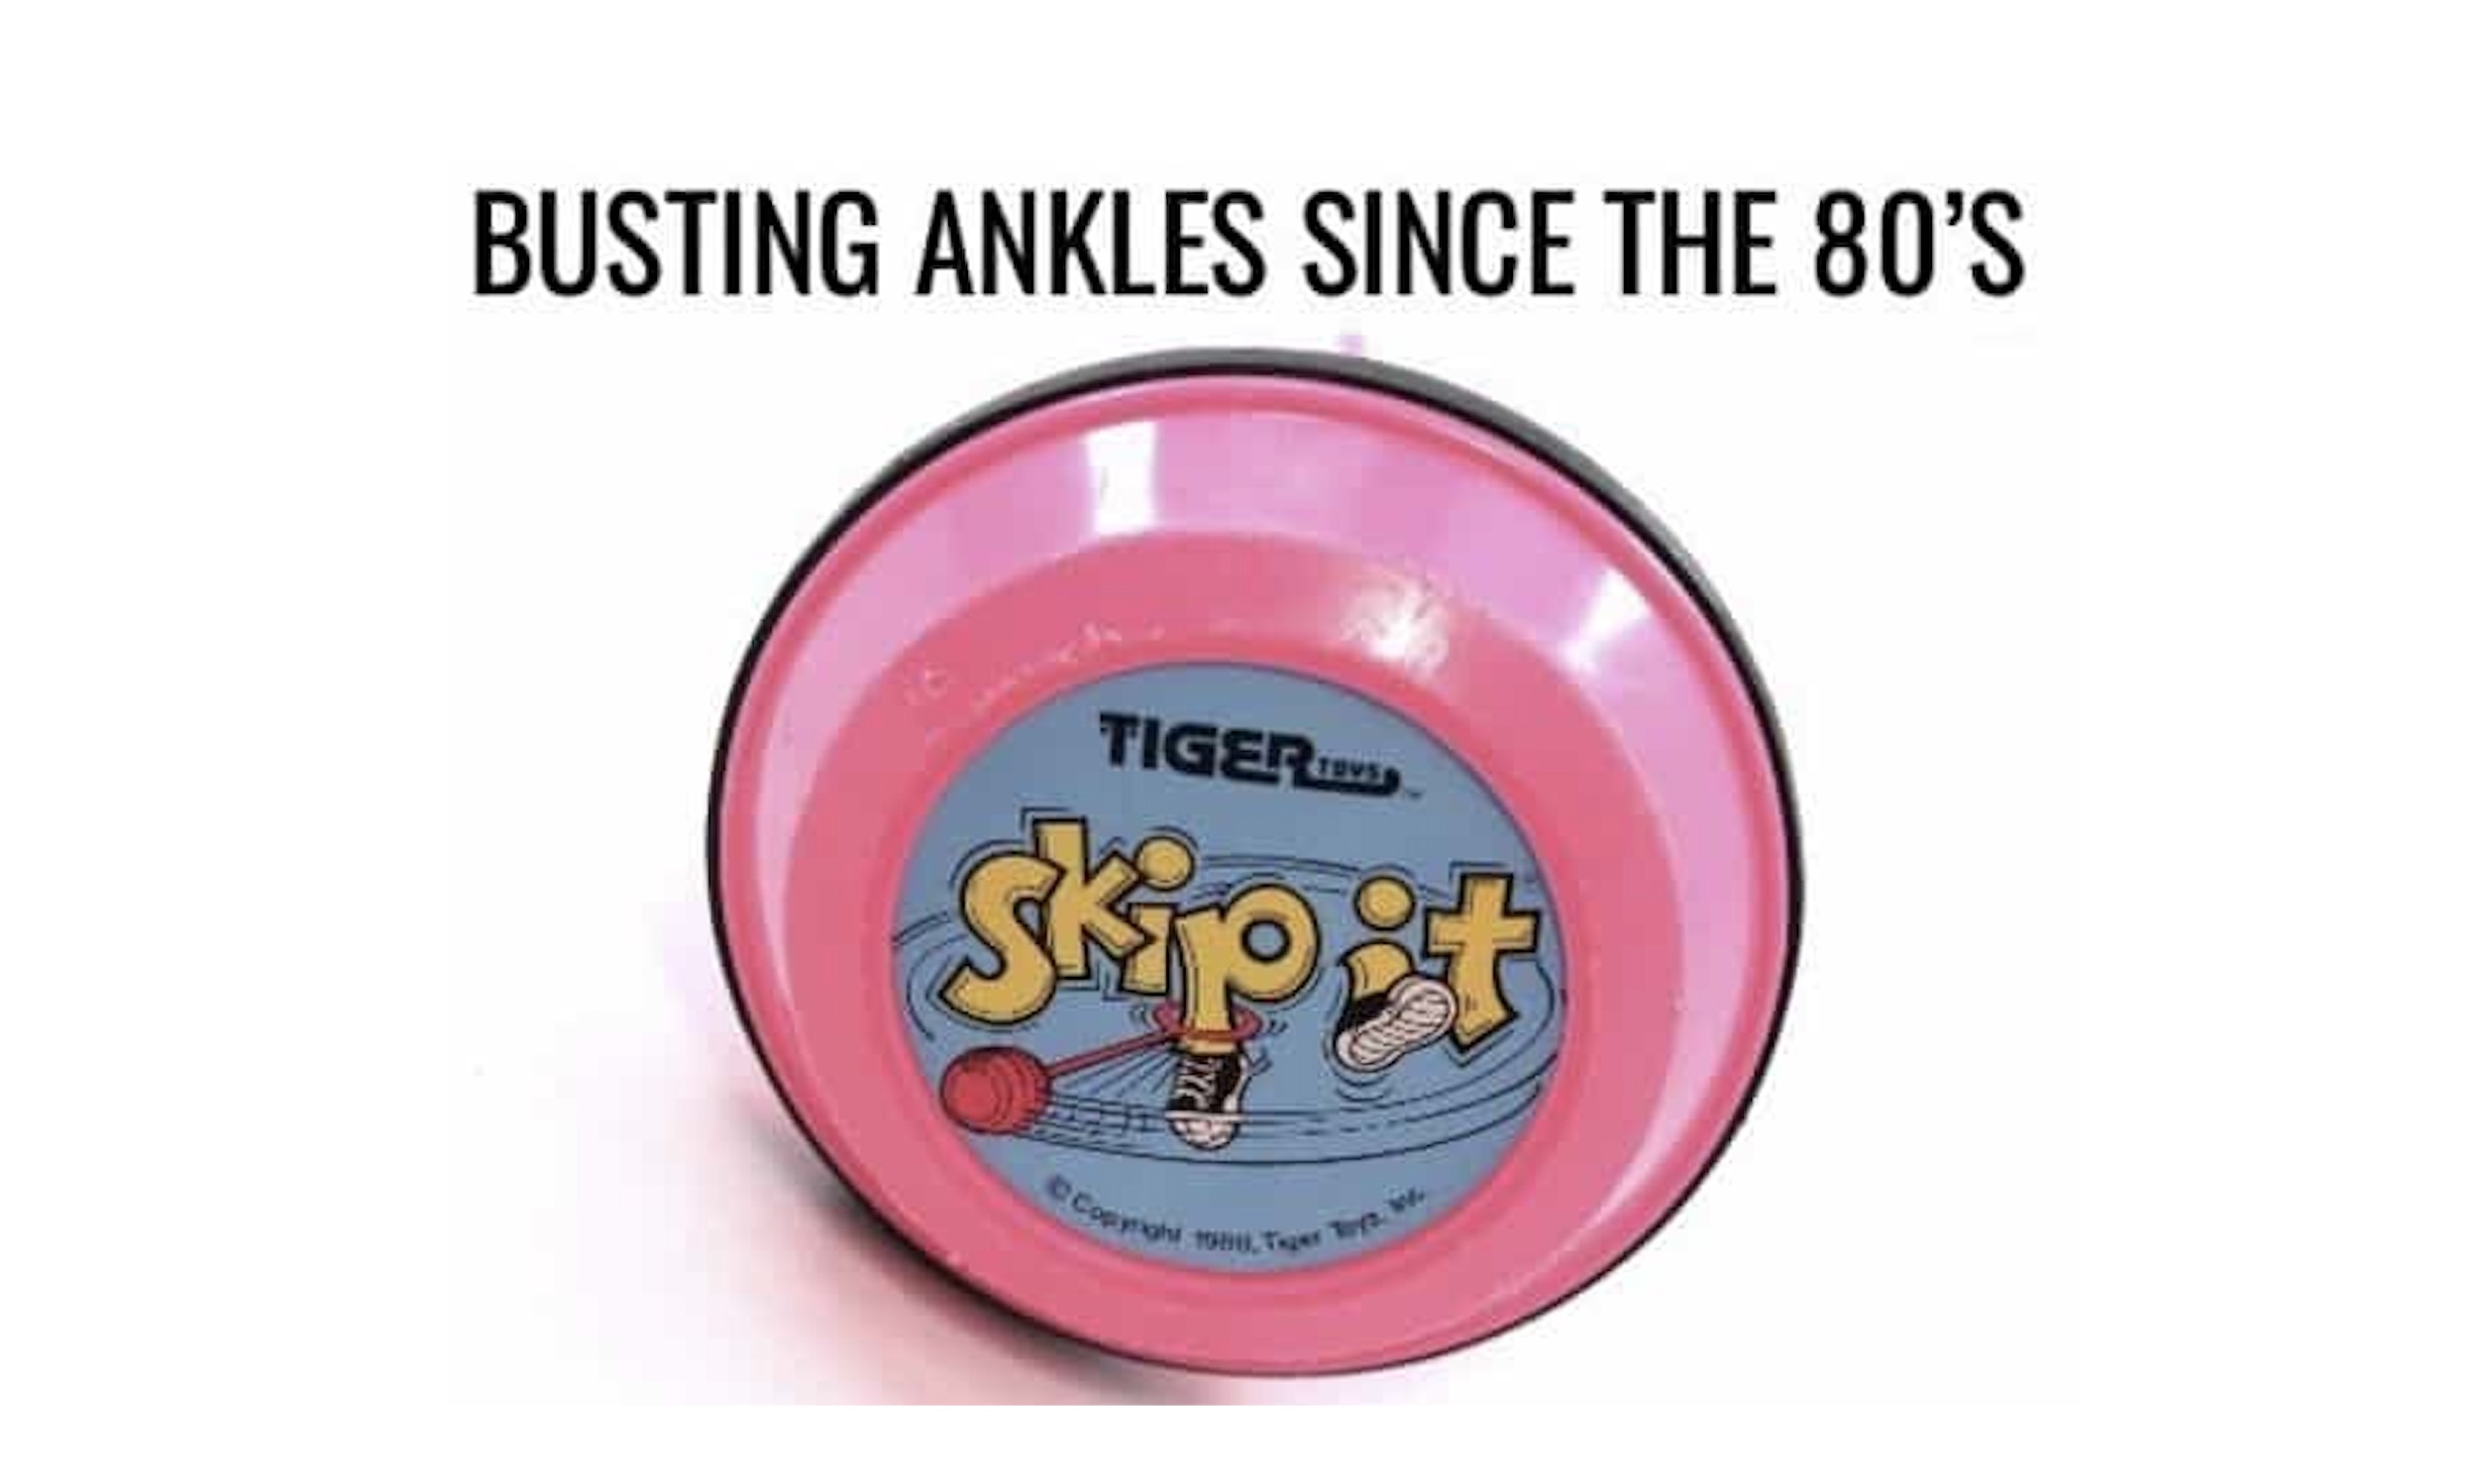 Skip it 80s